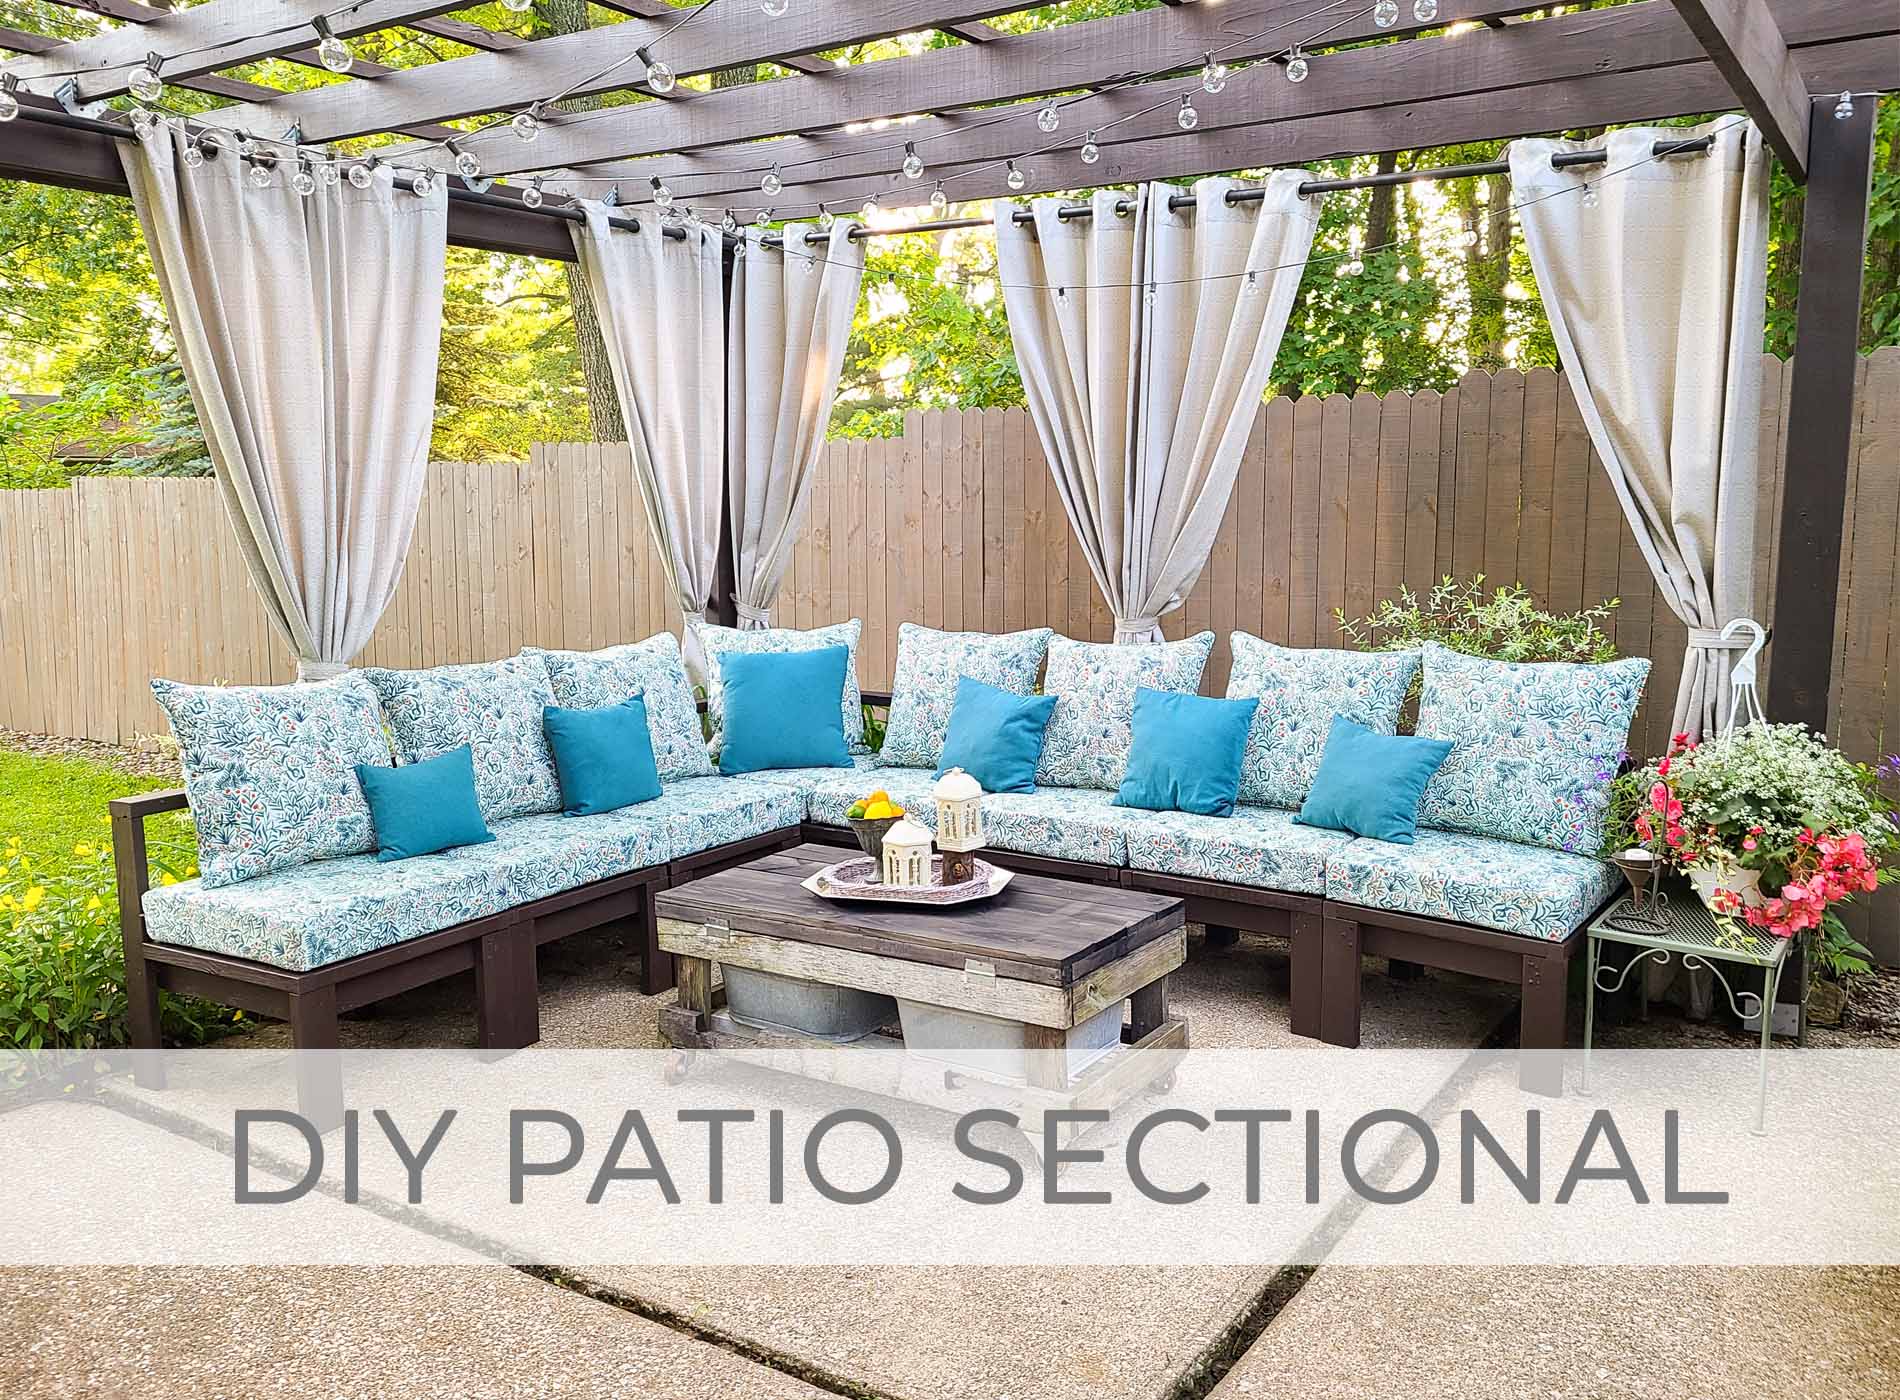 DIY Patio Secitonal Sofa Build Plans by Prodigal Pieces | prodigalpieces.com #prodigalpieces